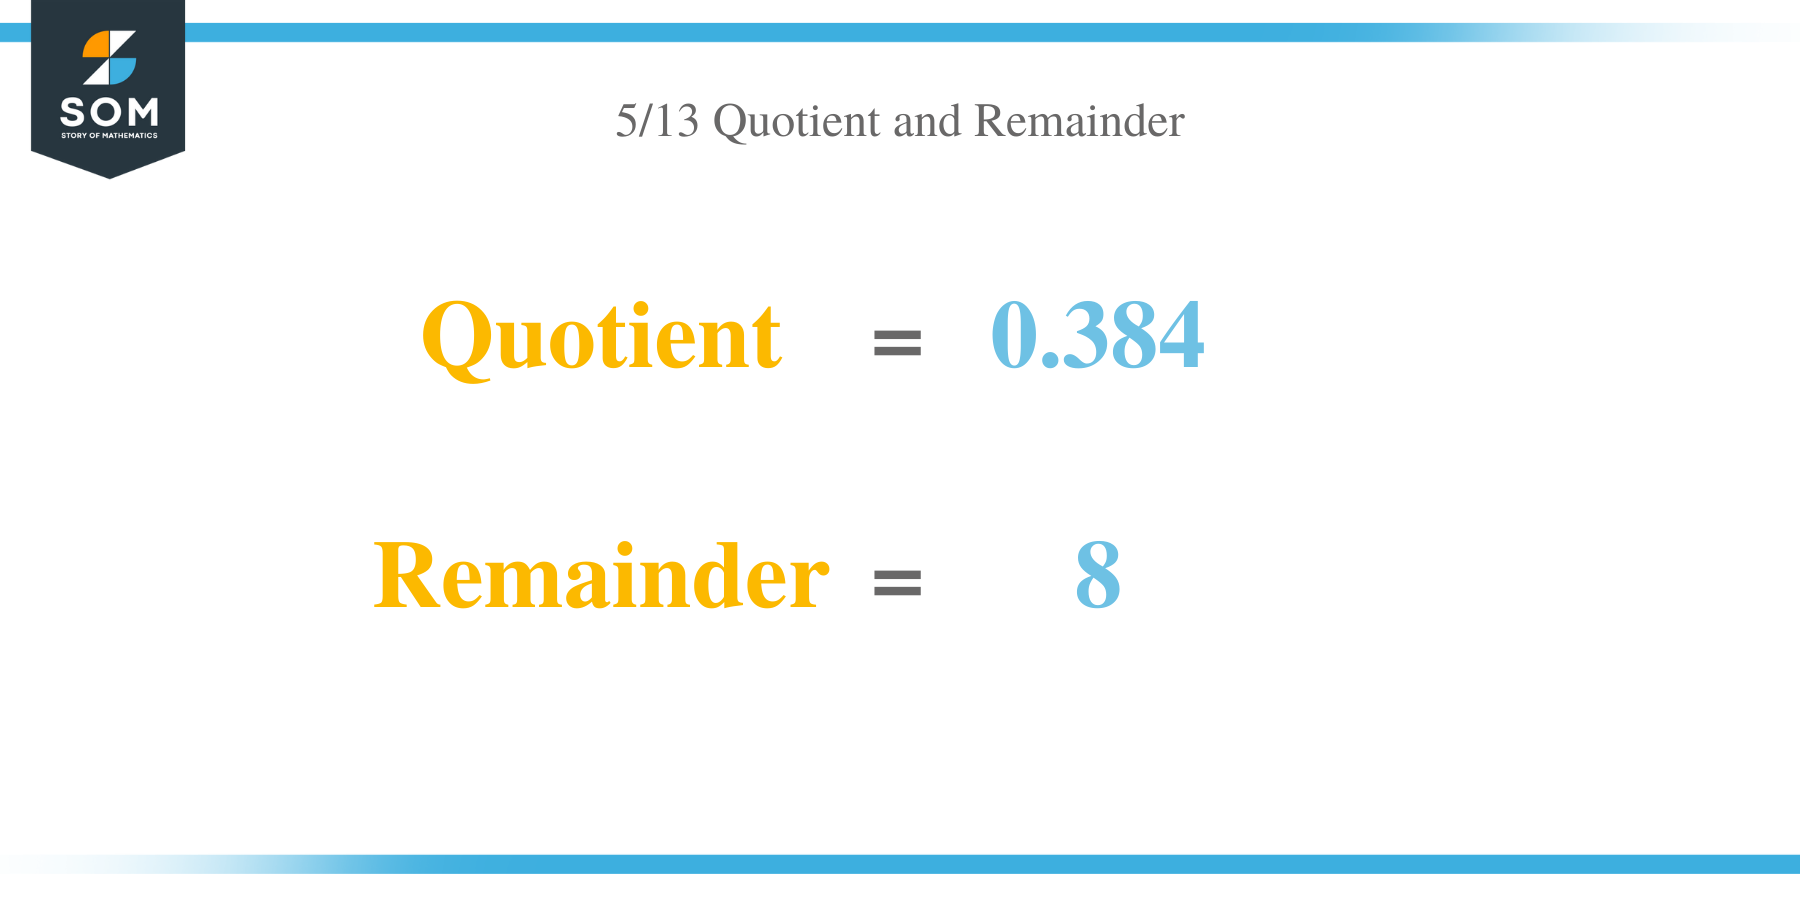 Quotient and Remainder of 5 per 13